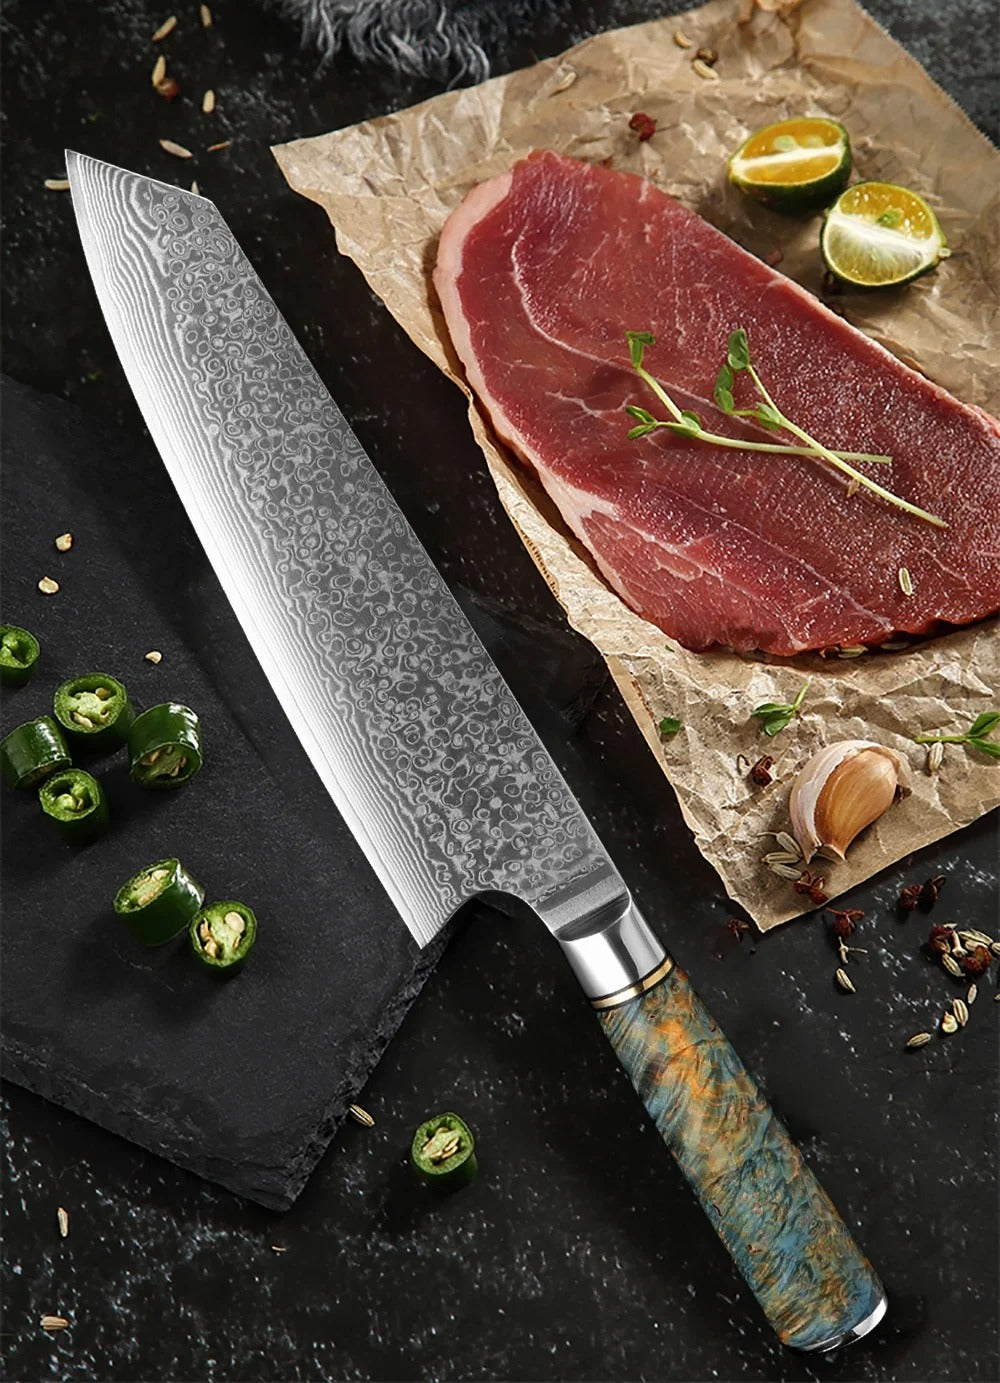 KD Damascus VG10 Steel 8-inch Chef Knife Japanes Kiritsuke Gyuto Cleaver Tool